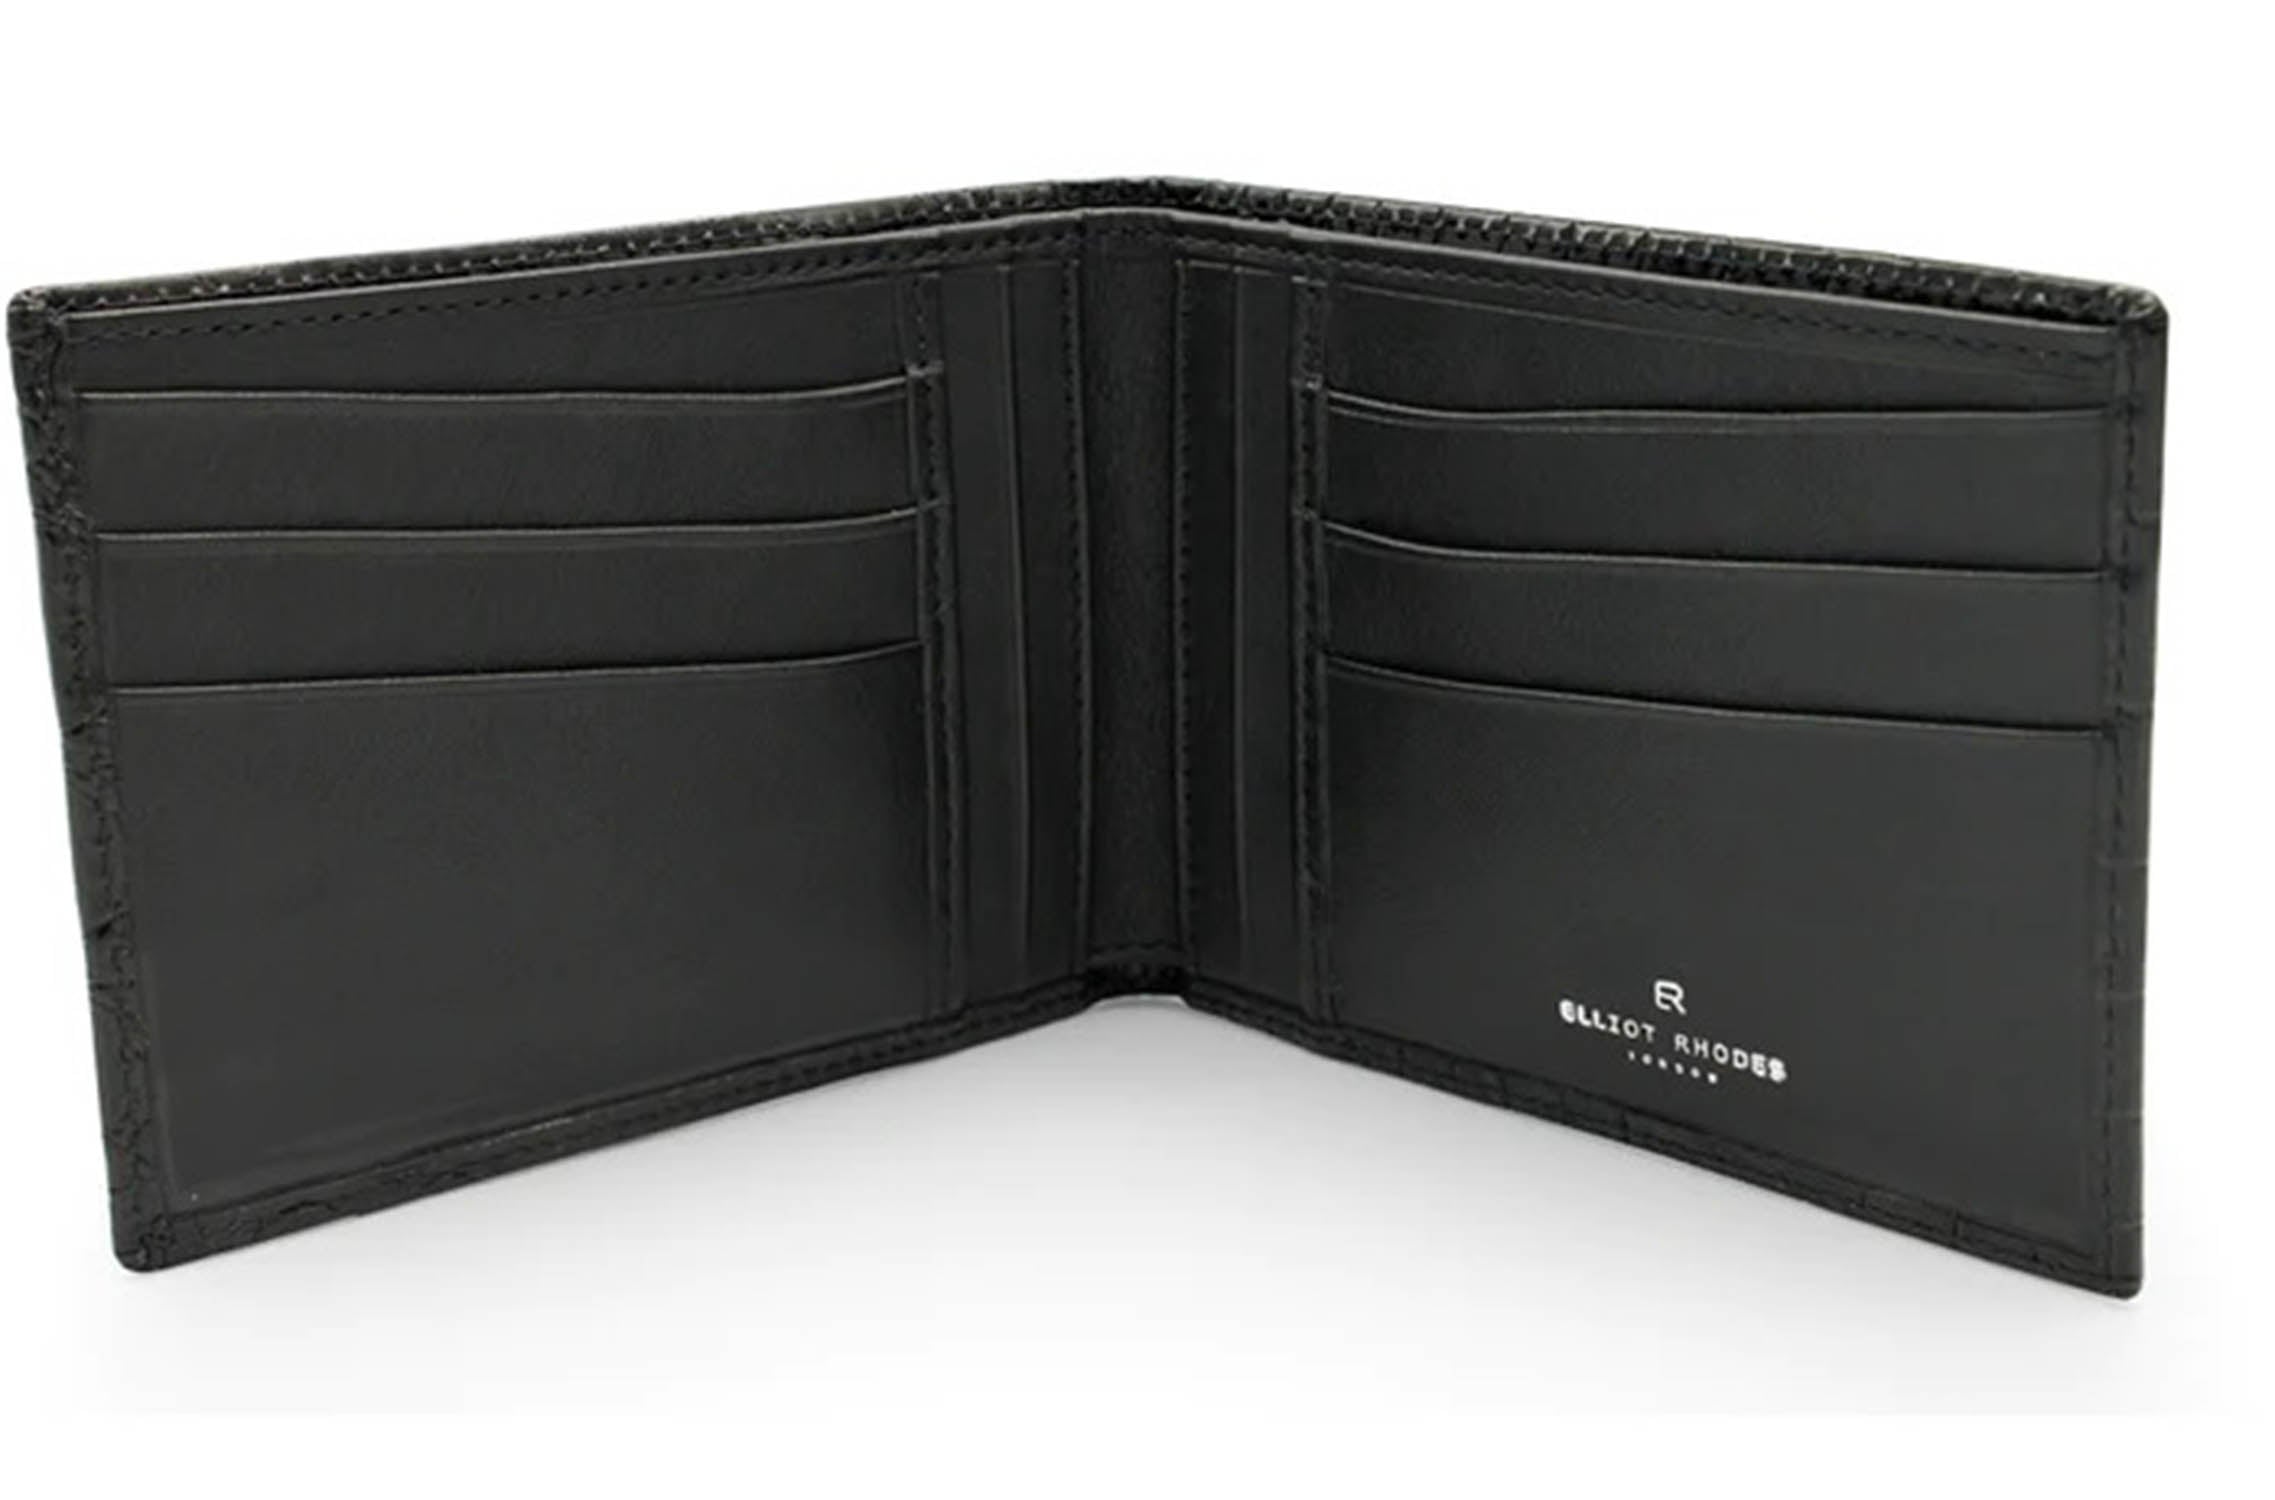 ELLIOT RHODES - COVENT GARDEN Mock Croc Billfold Wallet in BLACK AC-COV100